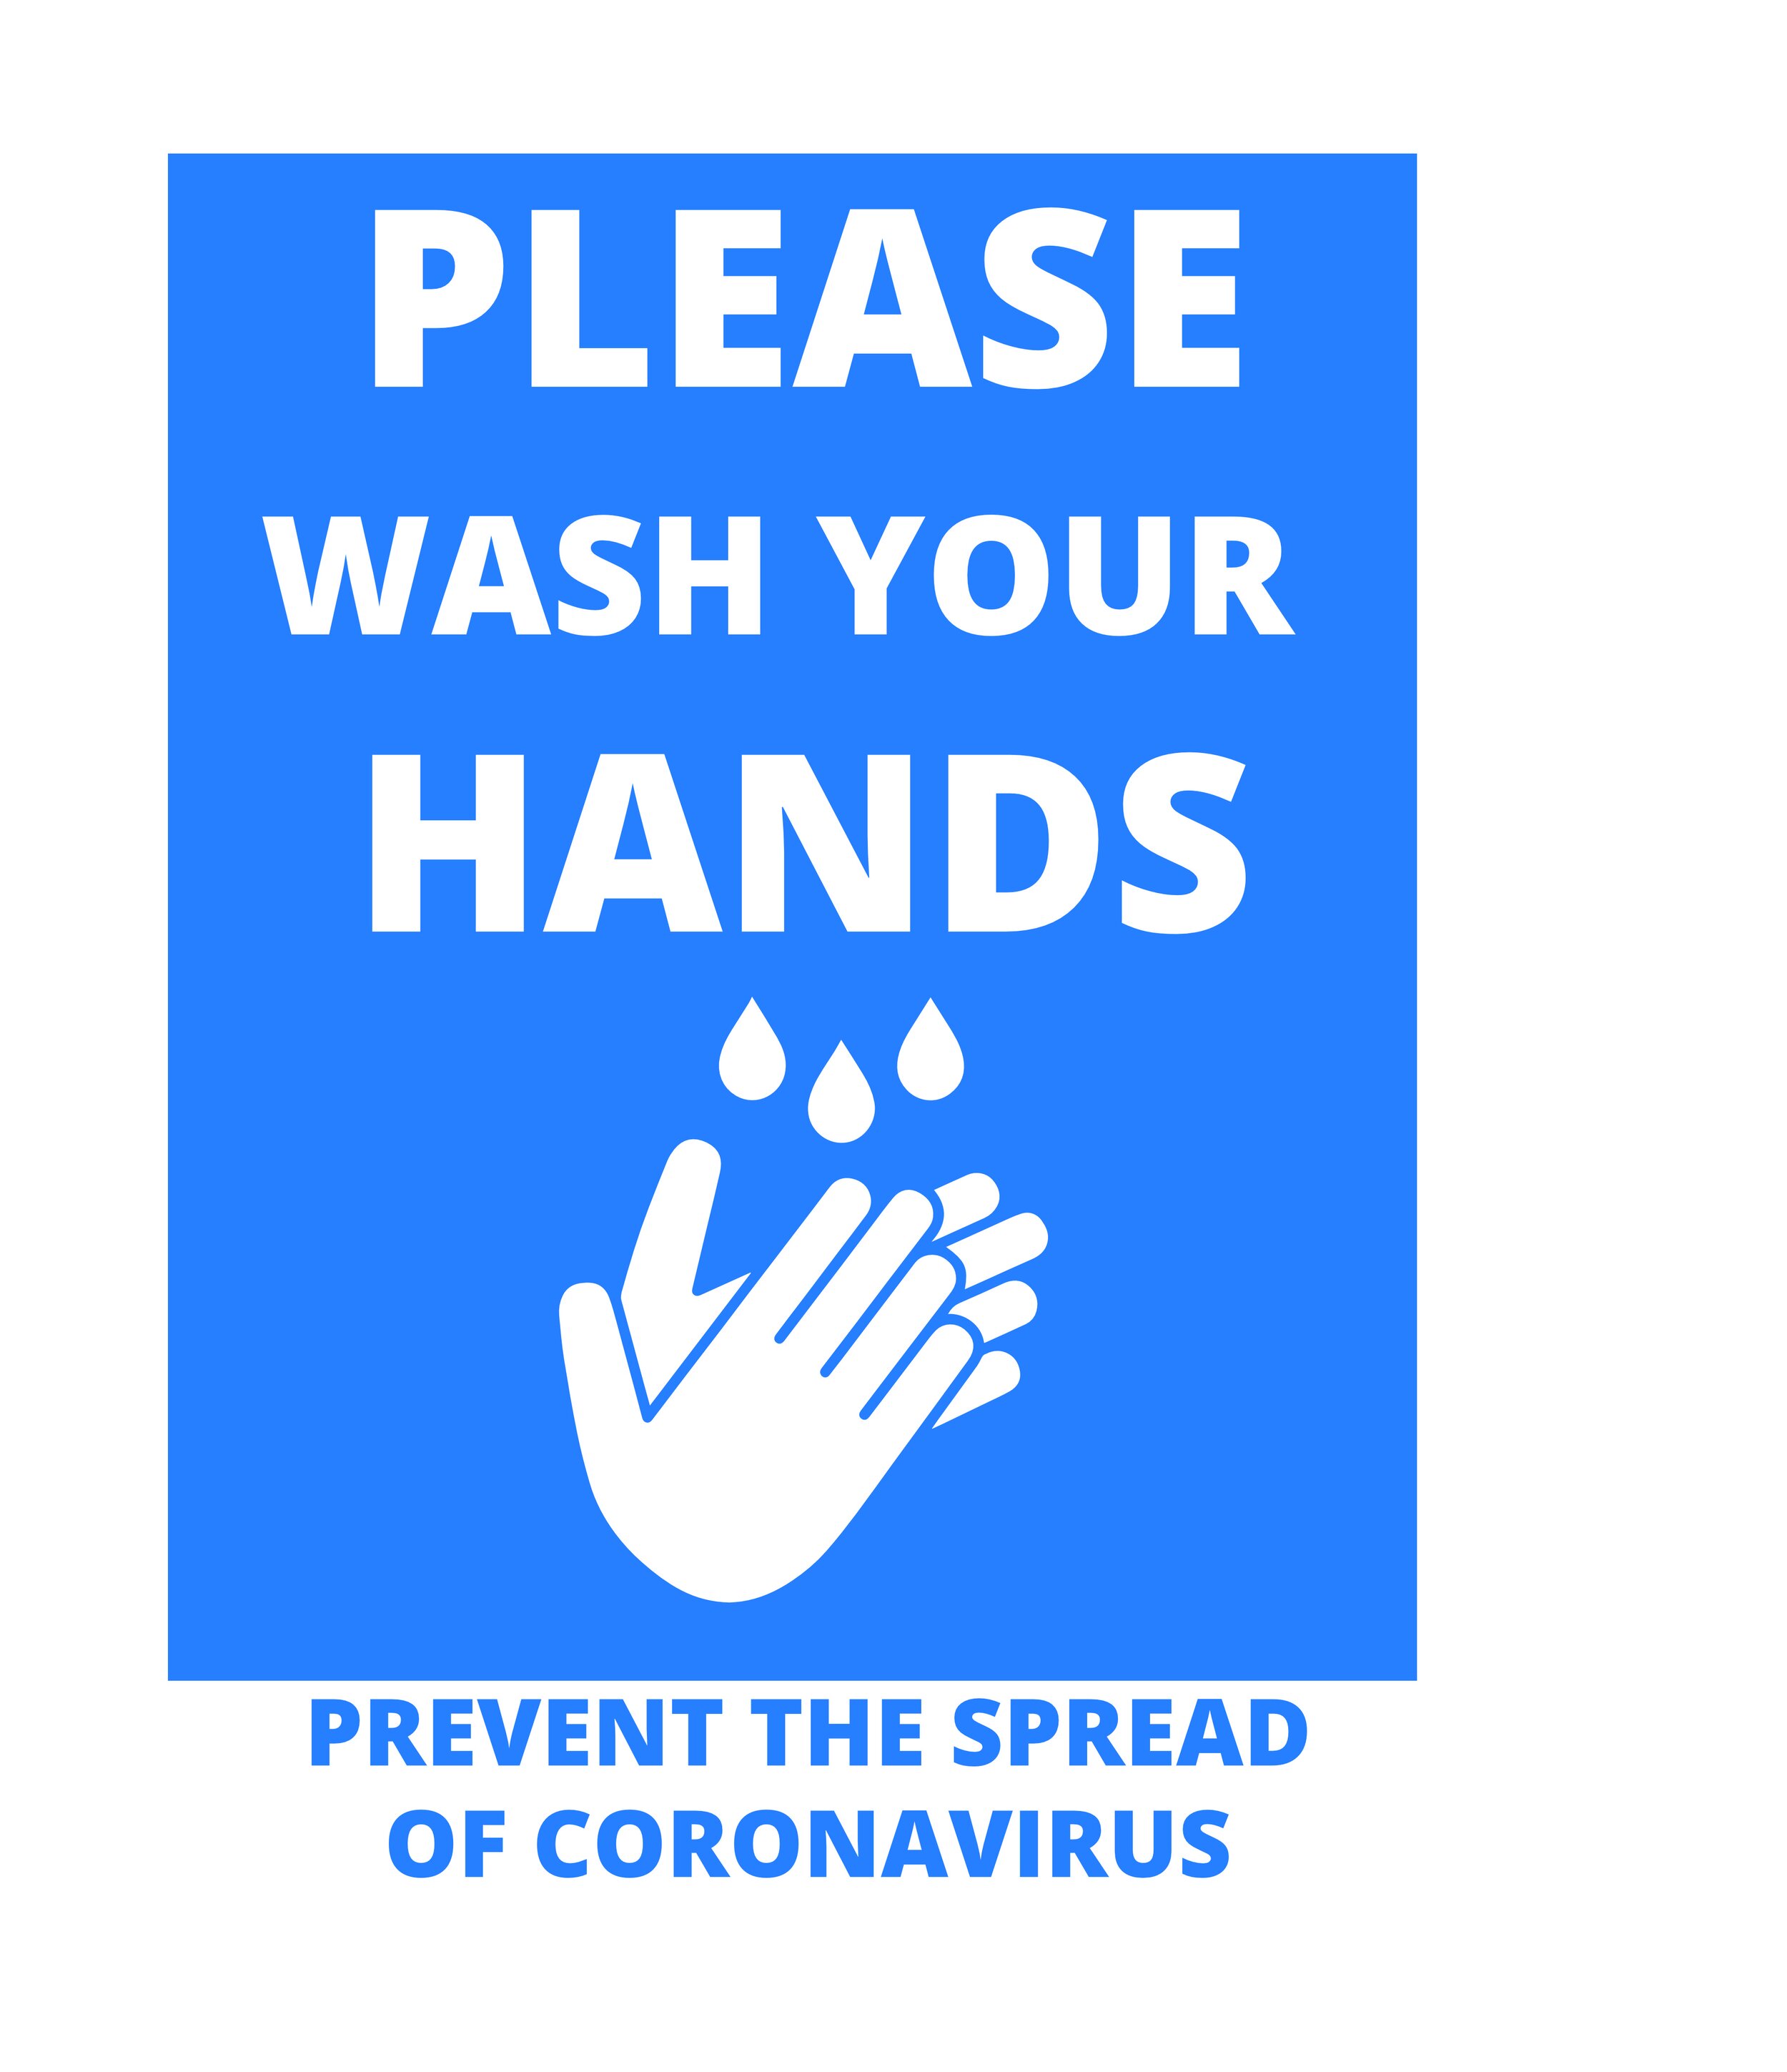 Please wash your hands wall sticker-blue.jpg